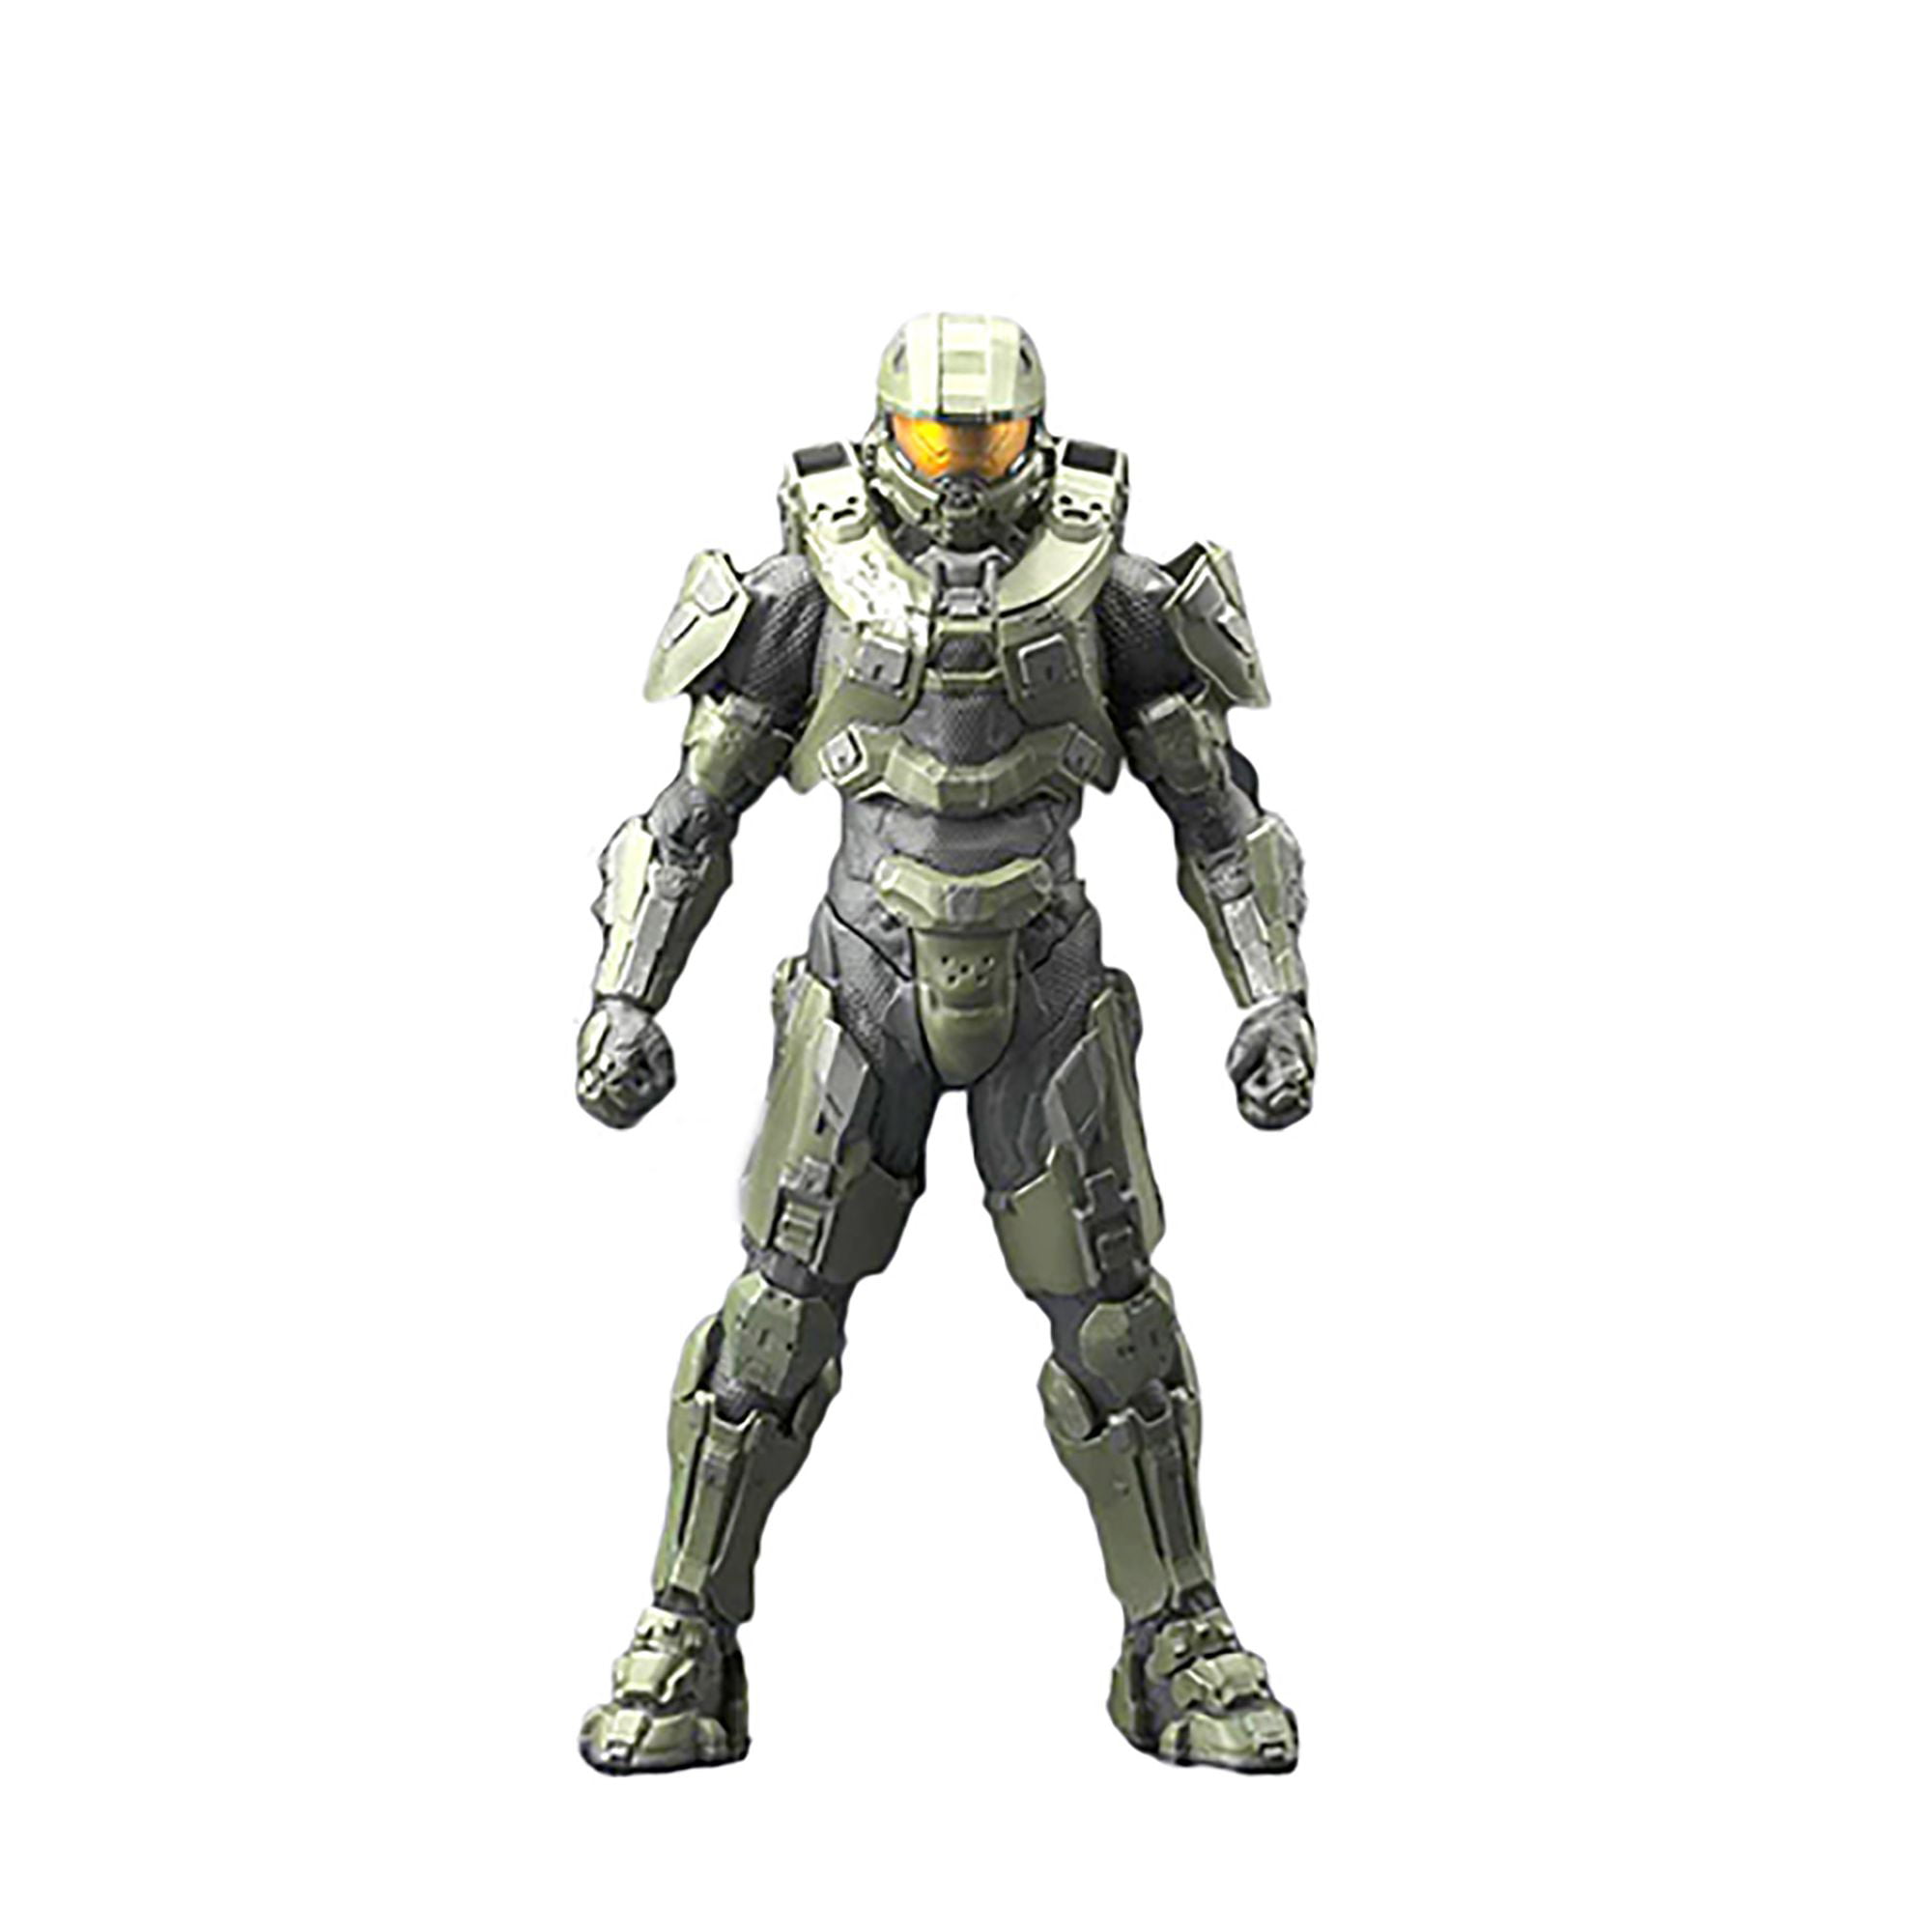 Kotobukiya Halo Master Chief Action Figure Toy - Walmart.com